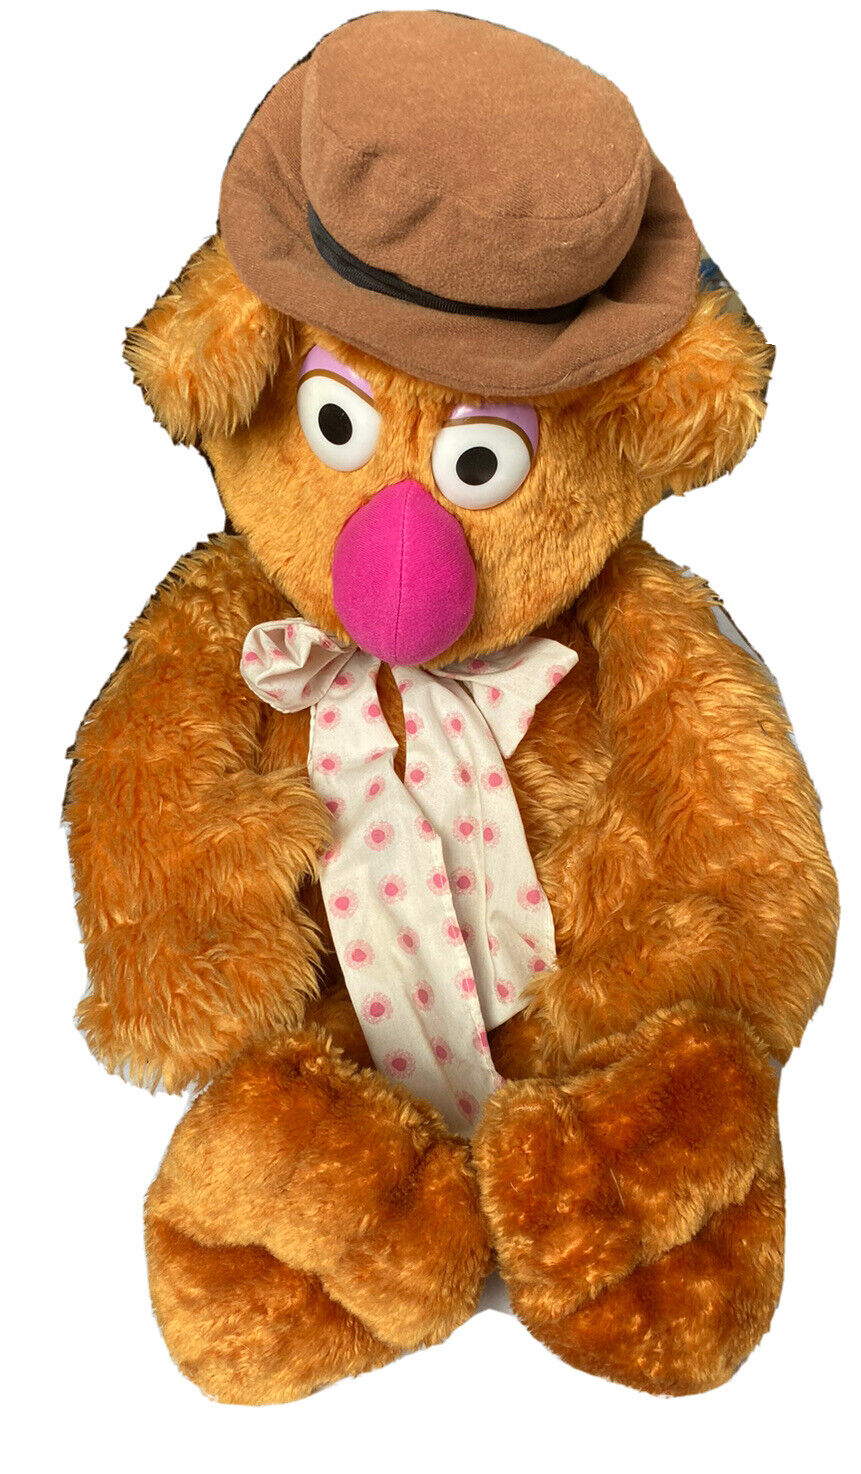 Vintage Nanco Muppets Fozzie the Bear Stuffed animal 30 inches tall Jim Henson